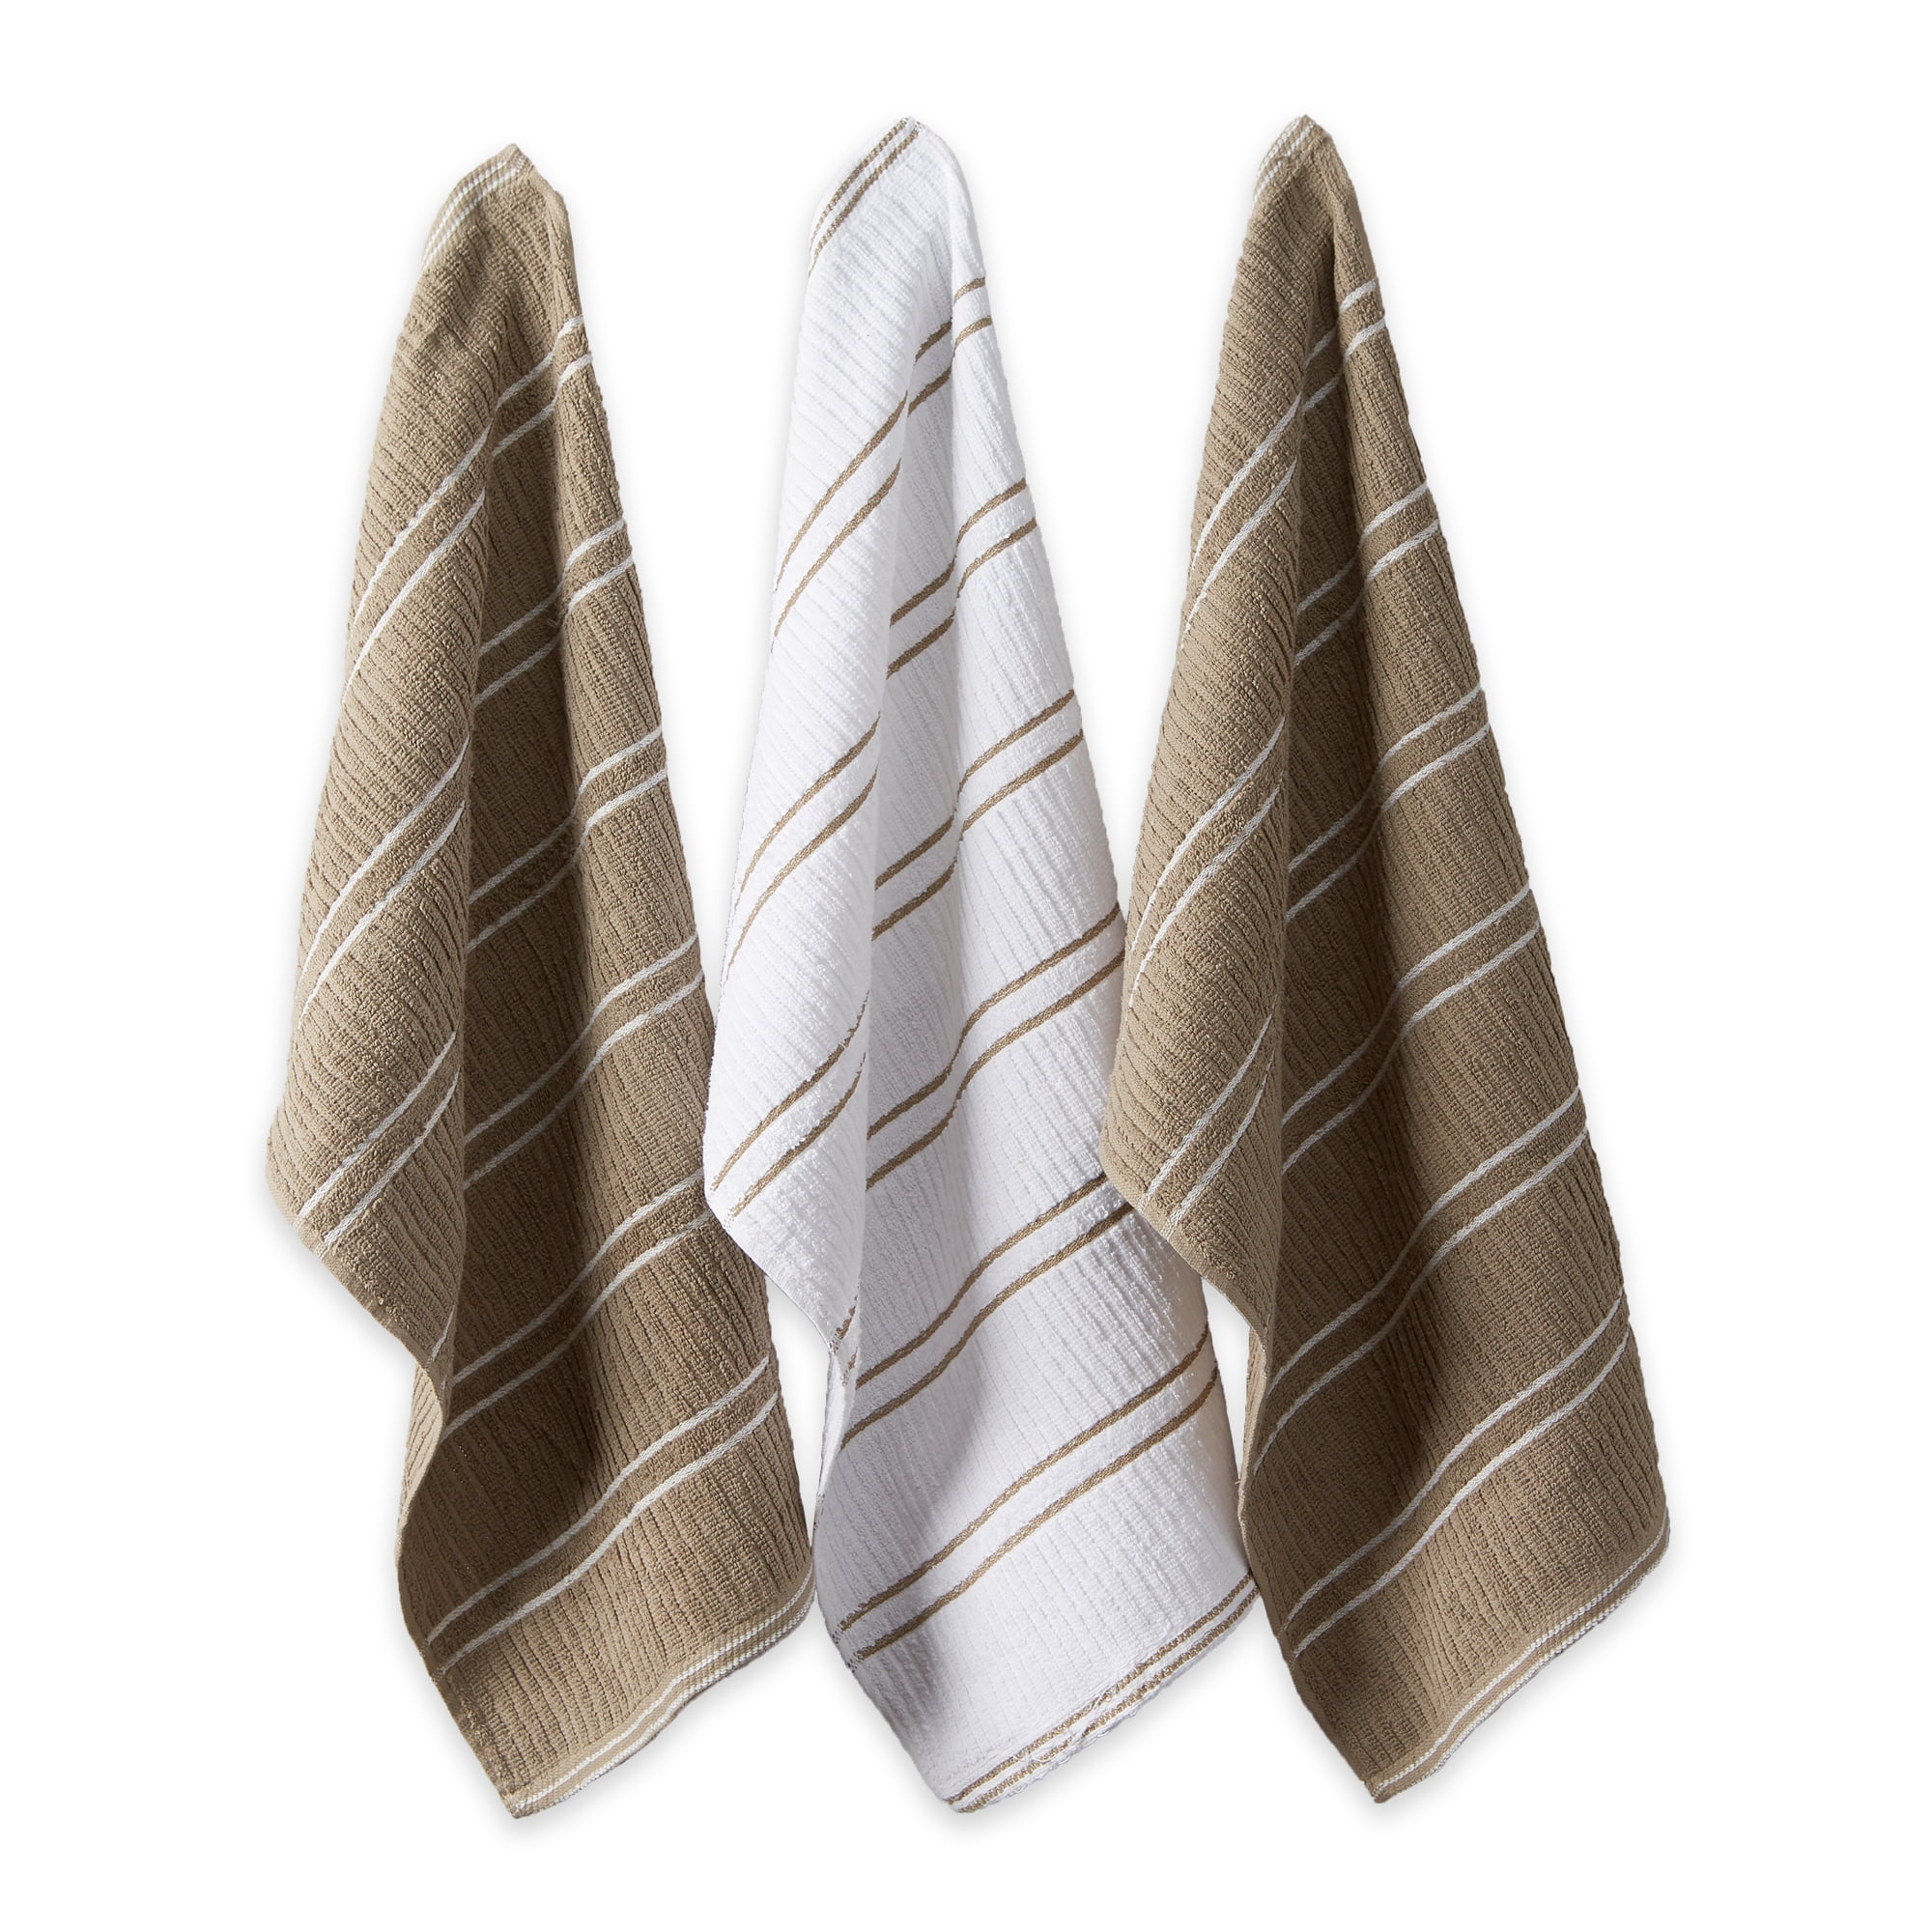 Details about   2 Cocktail Themed Cotton Kitchen Towels 15”x25” 